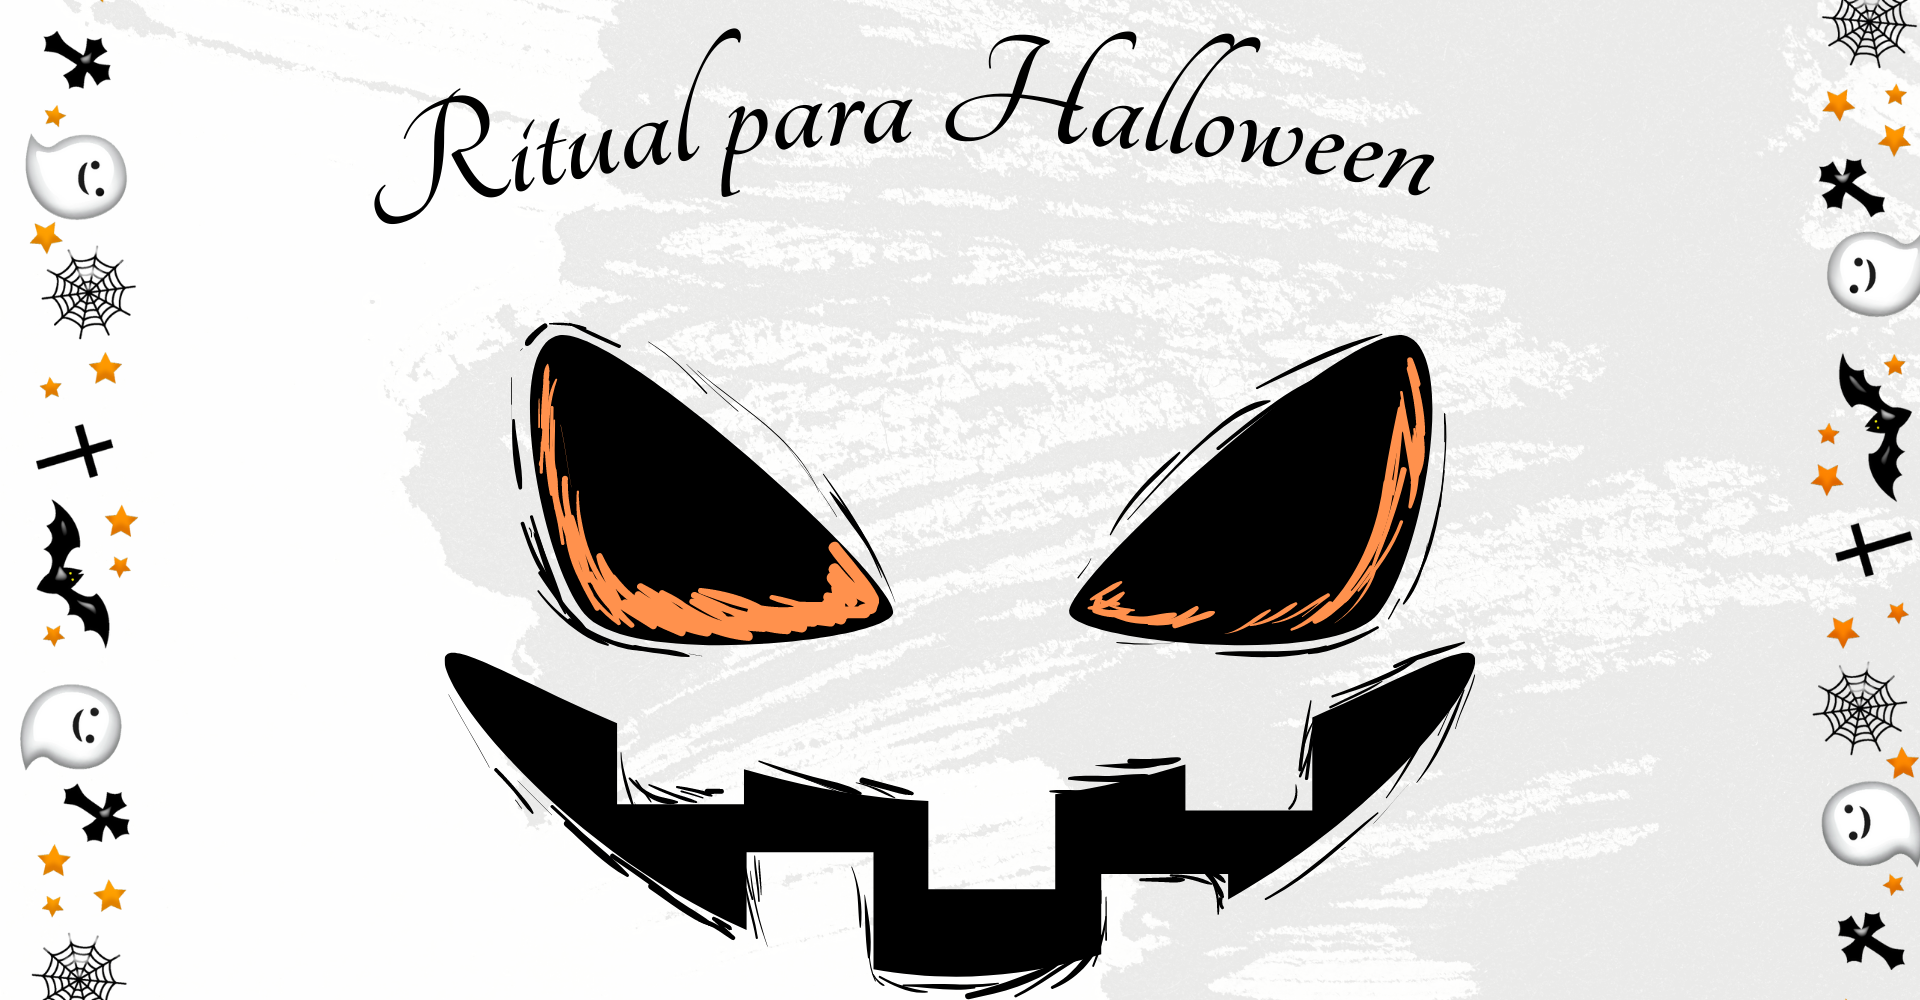 Ritual para halloween